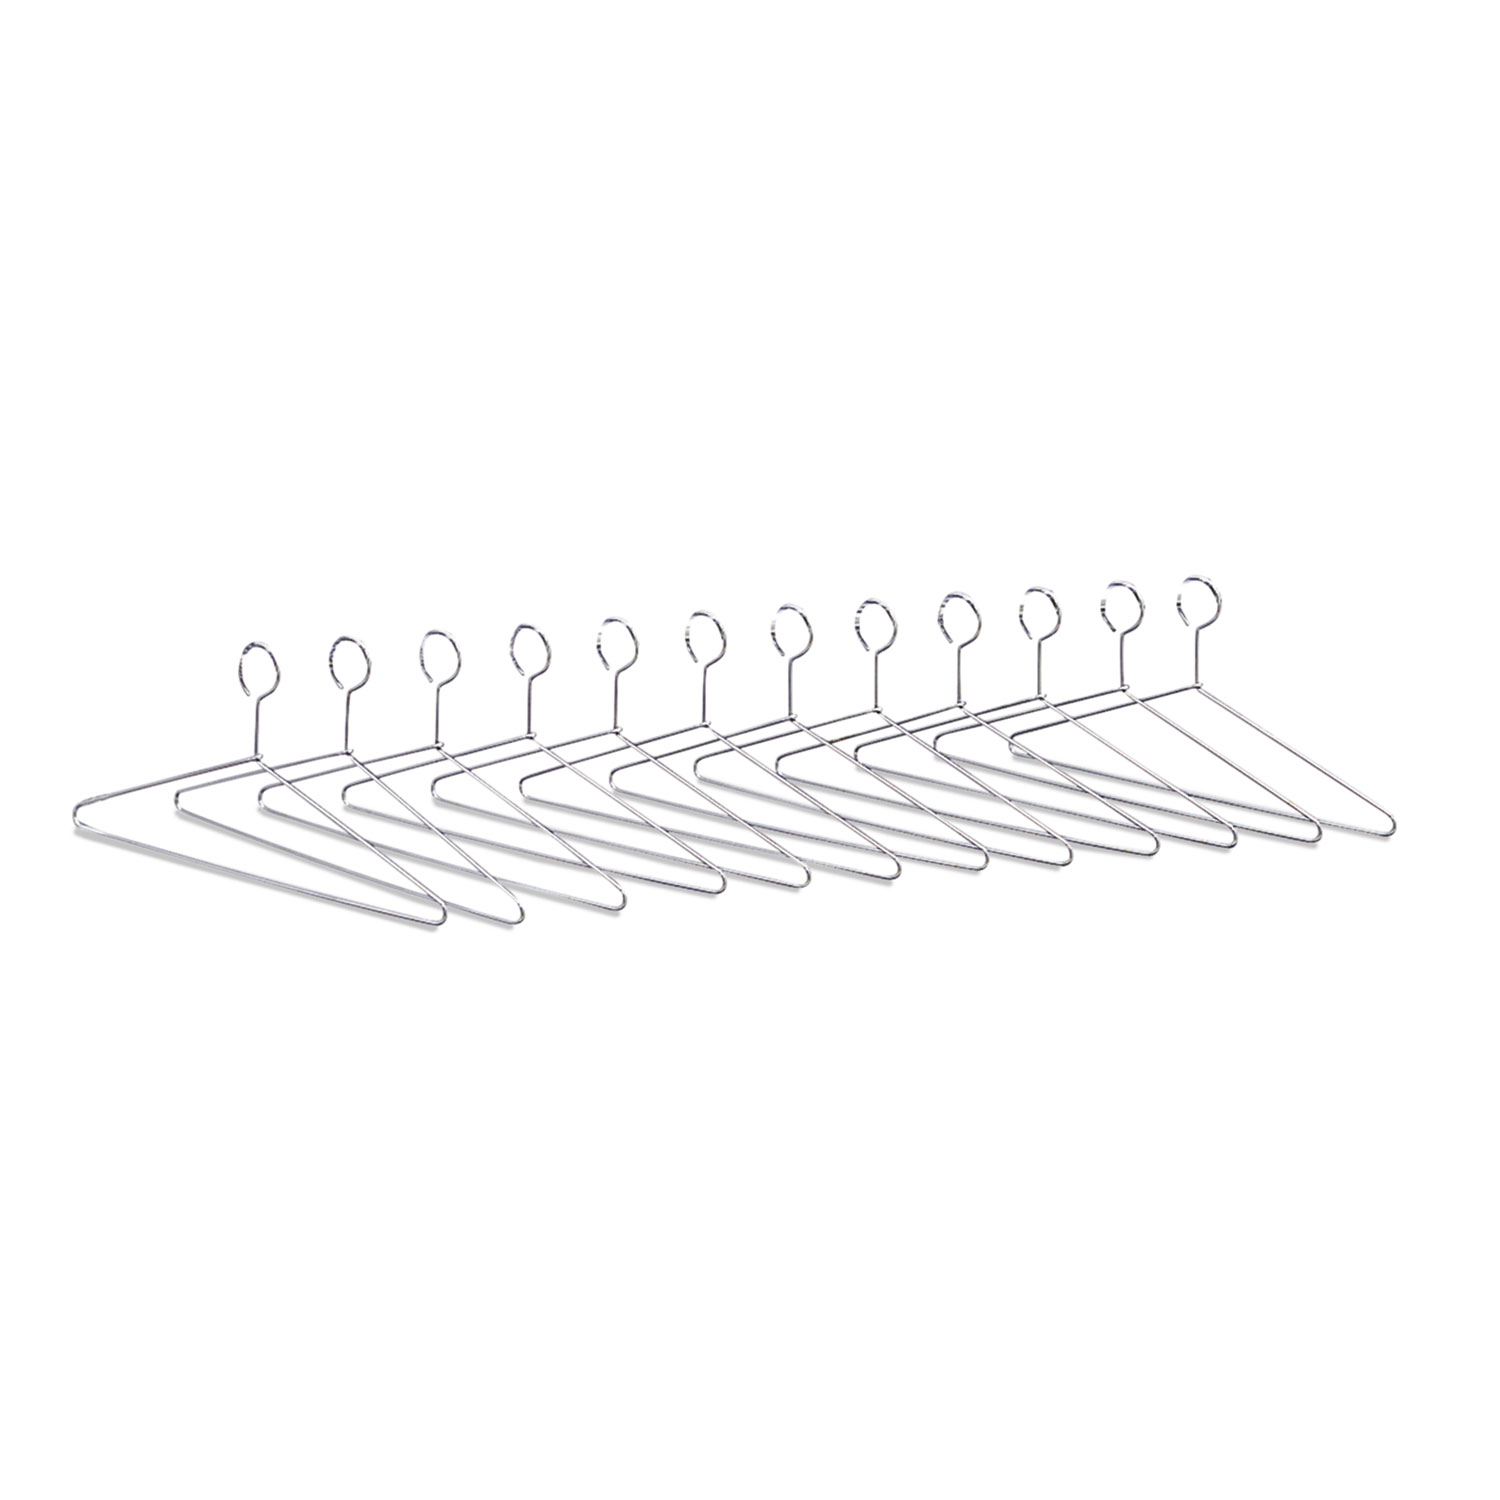 Hangers for Safco Shelf Rack, 17, Steel Hook, Chrome-Plated, 12/Carton